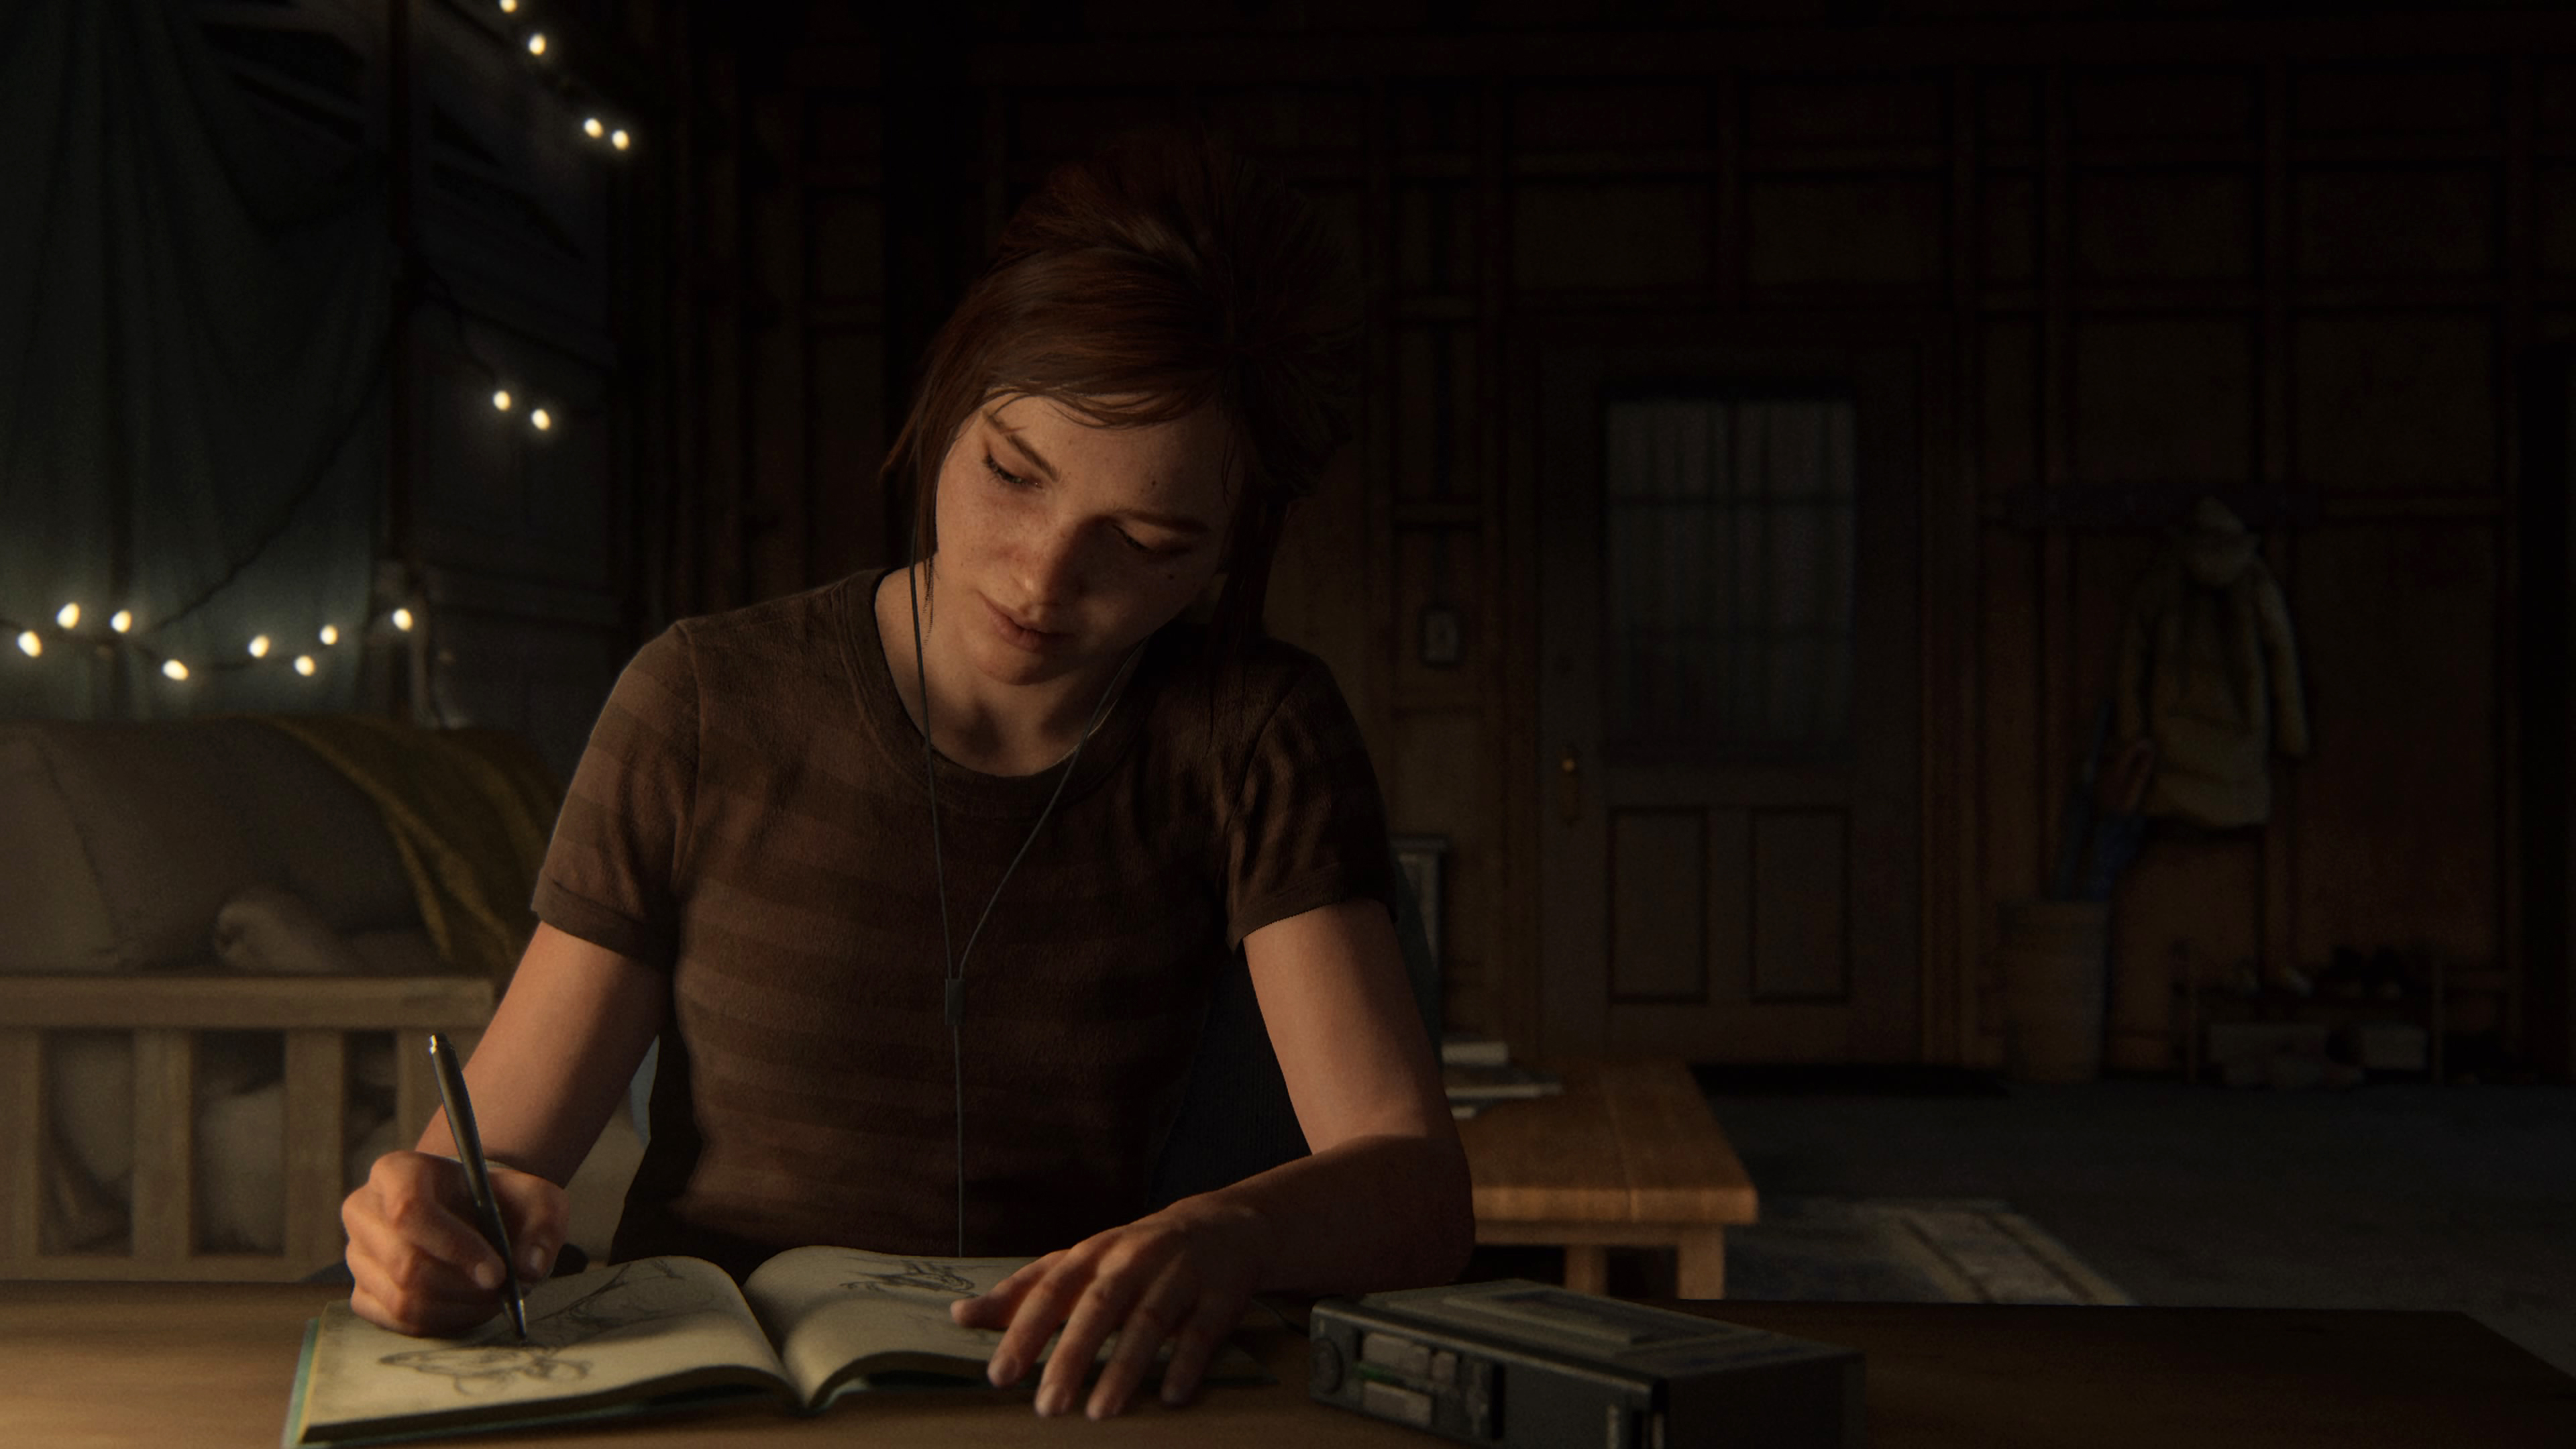 Ellie - The Last of Us Part 2